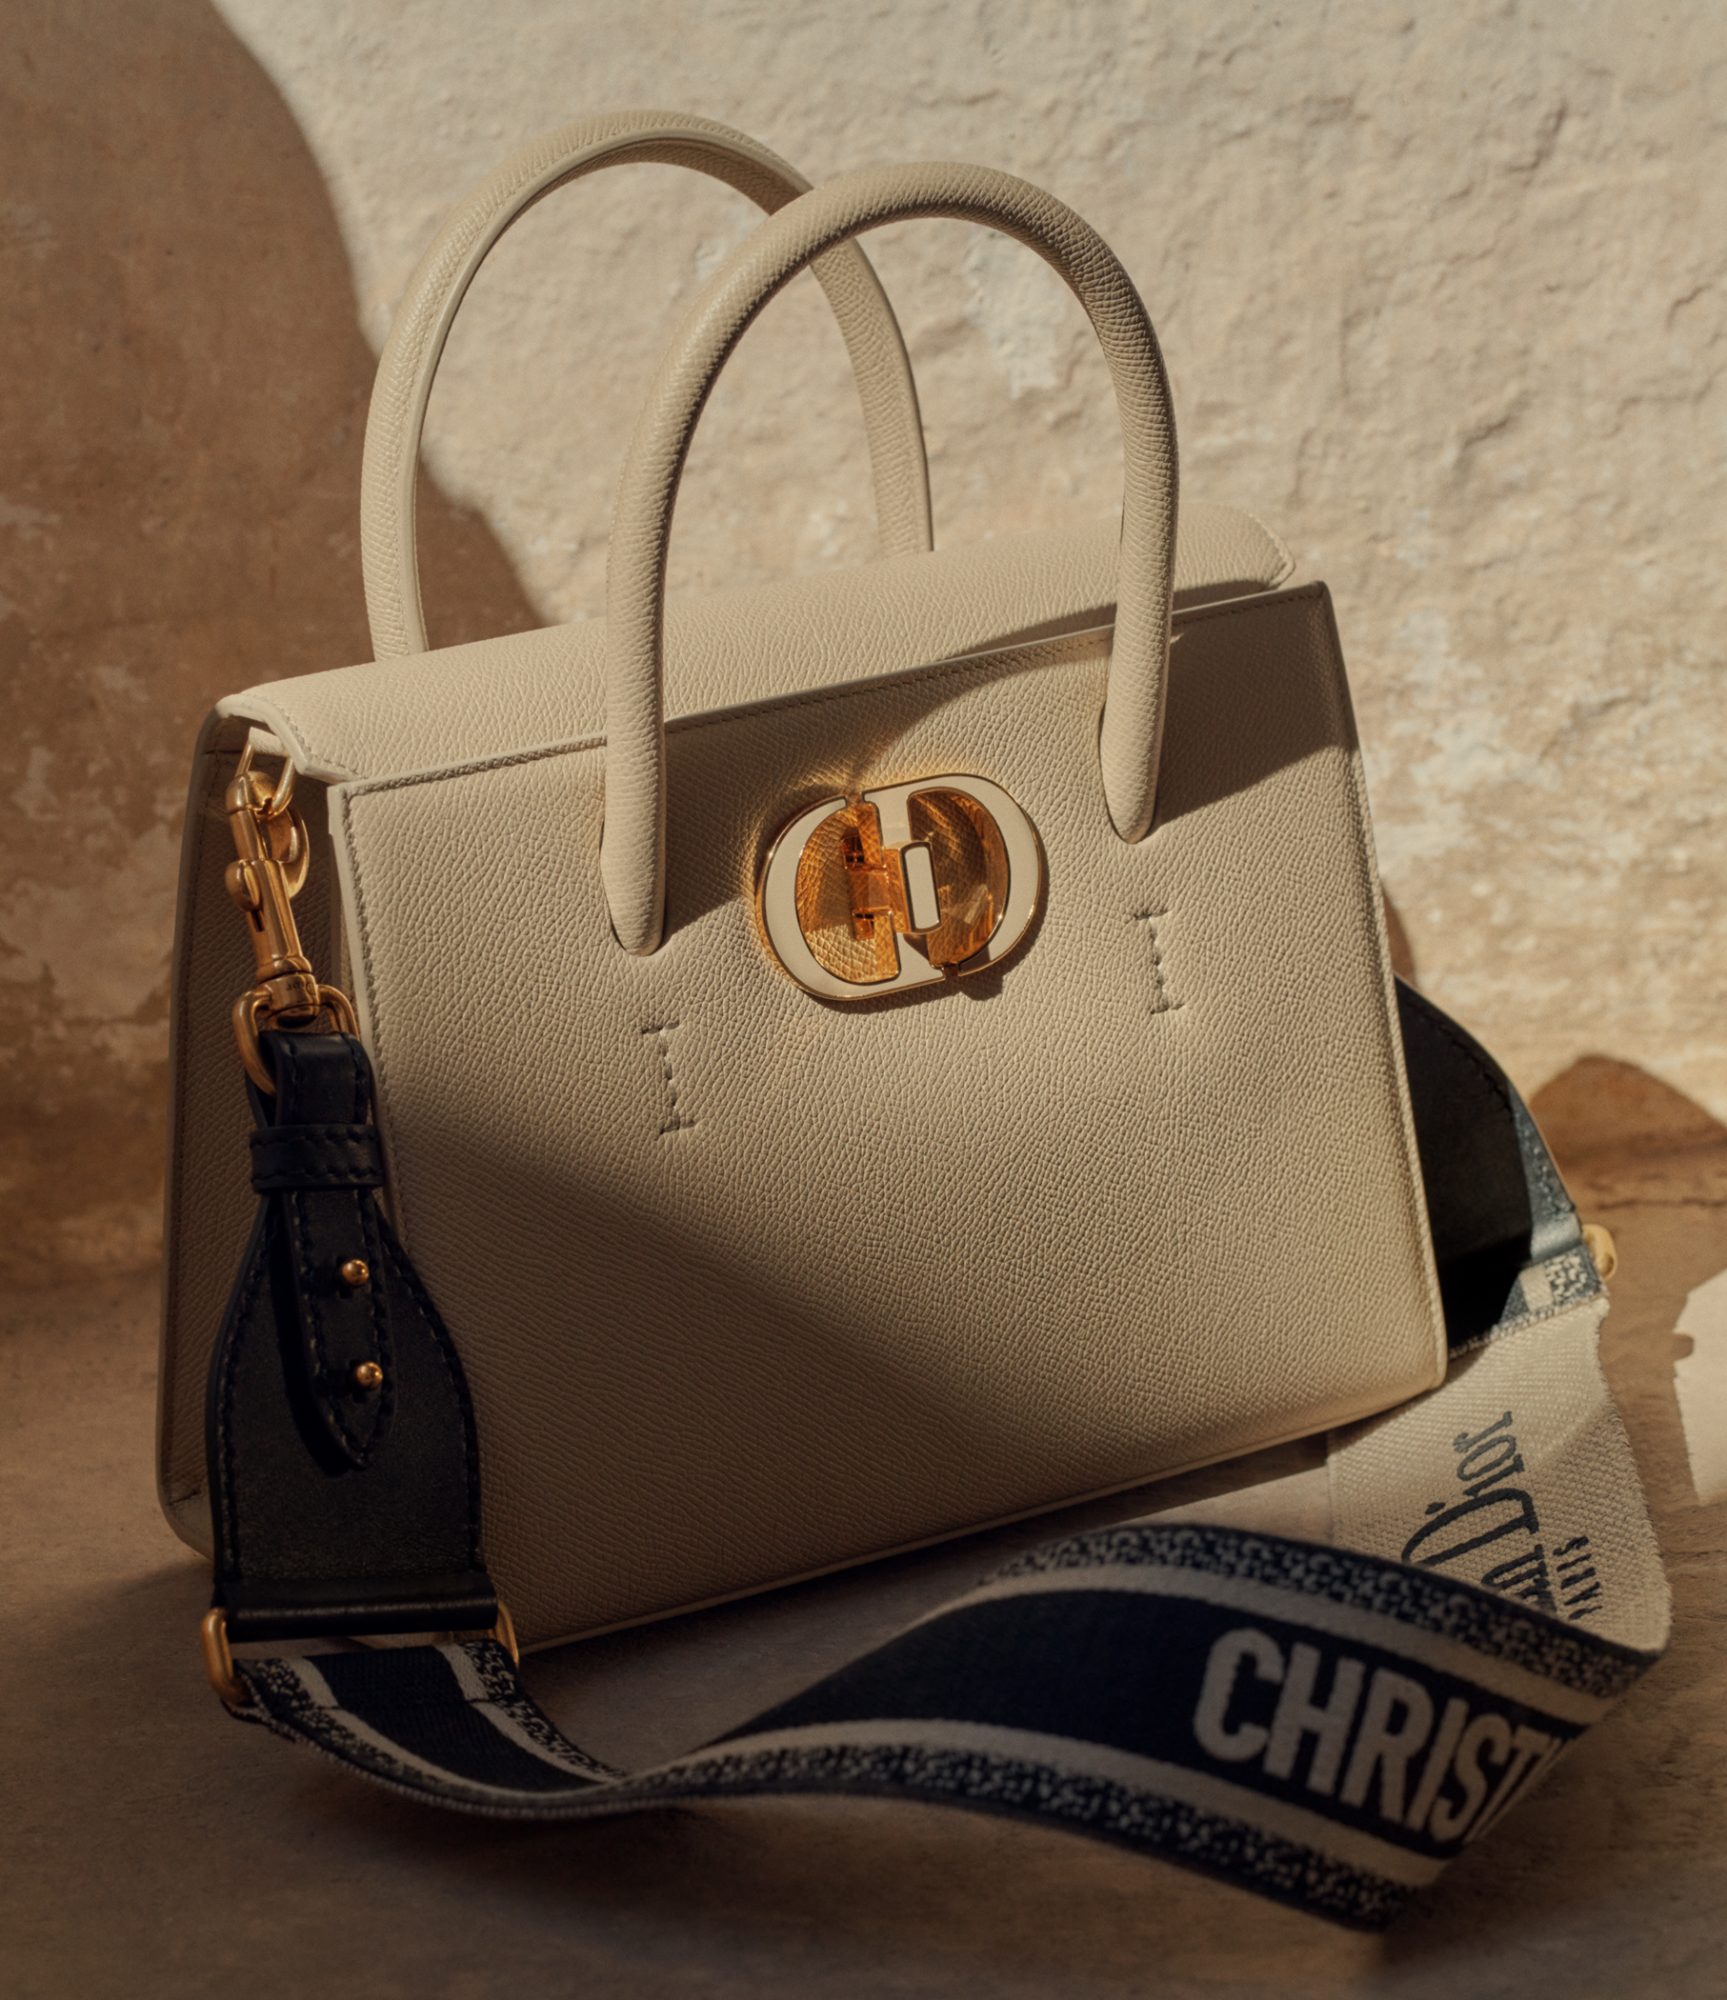 St Honoré: Η νέα τσάντα του οίκου Dior είναι μια ωδή στην κομψότητα